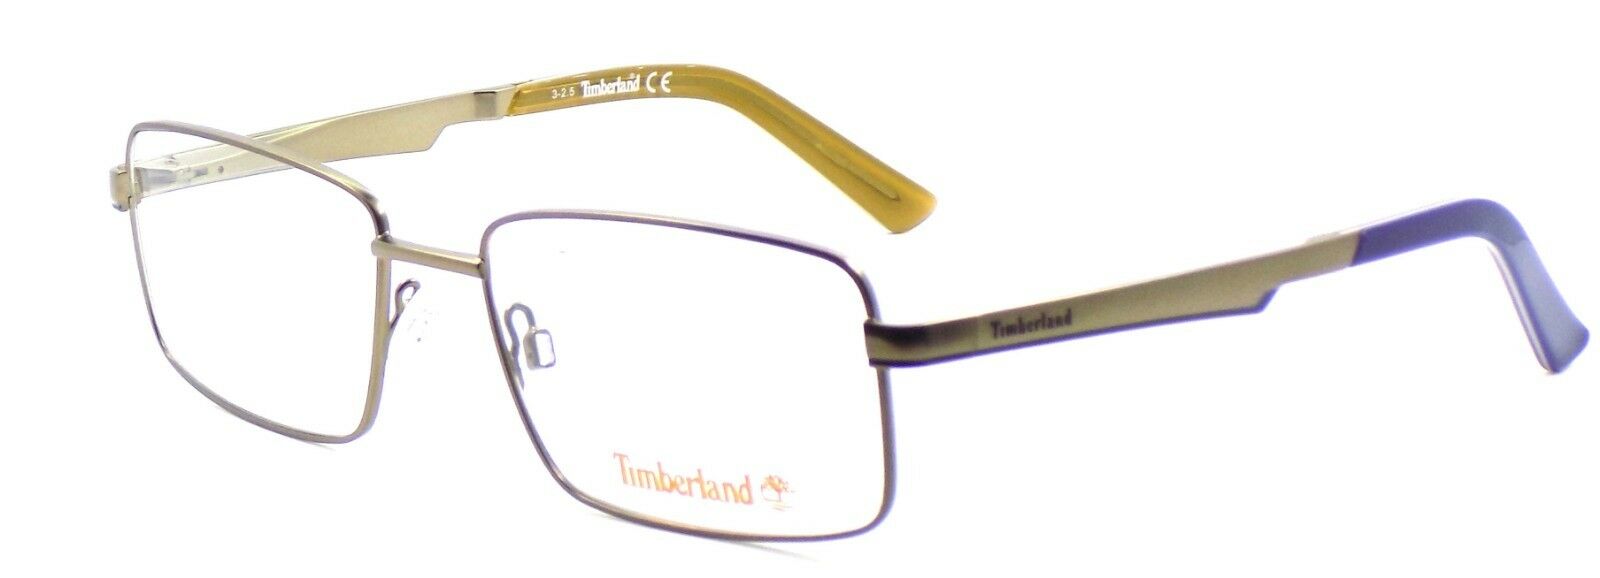 1-TIMBERLAND TB1311 037 Men's Eyeglasses Frames 53-17-140 Matte Dark Bronze + CASE-664689682720-IKSpecs